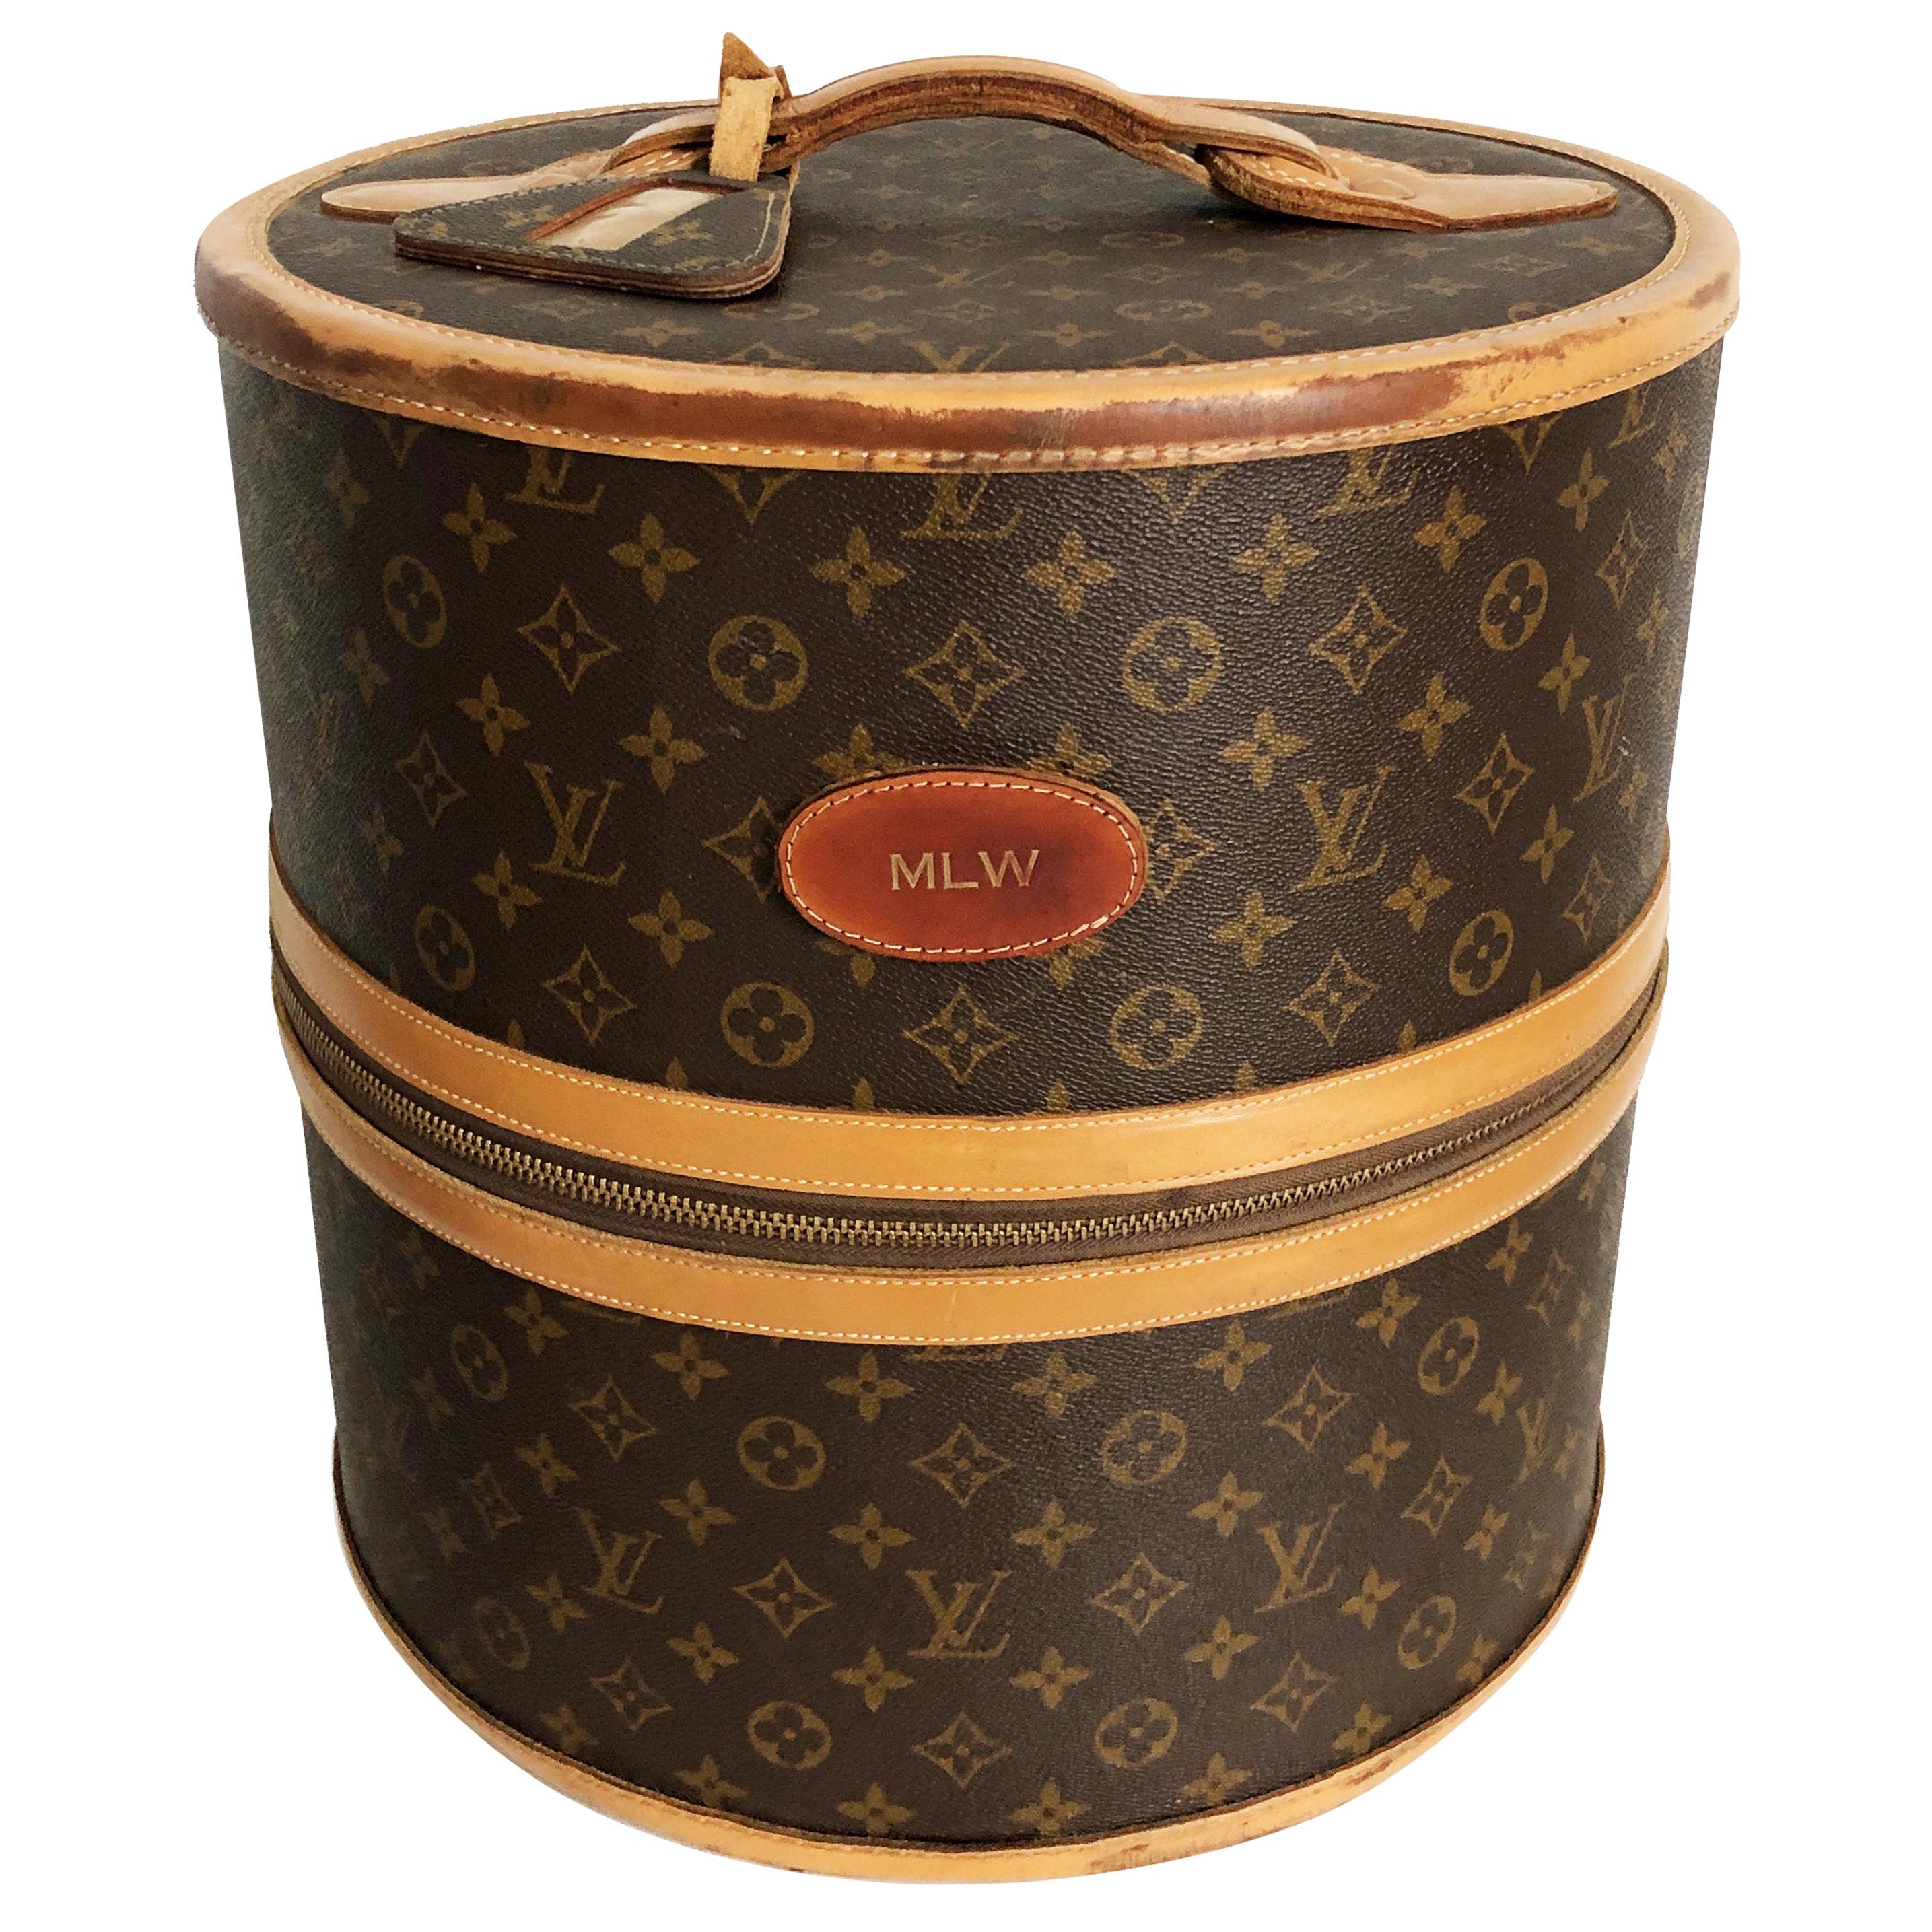 Louis Vuitton French Company Monogram Round Hat Box Wig Case Travel Bag 1970s